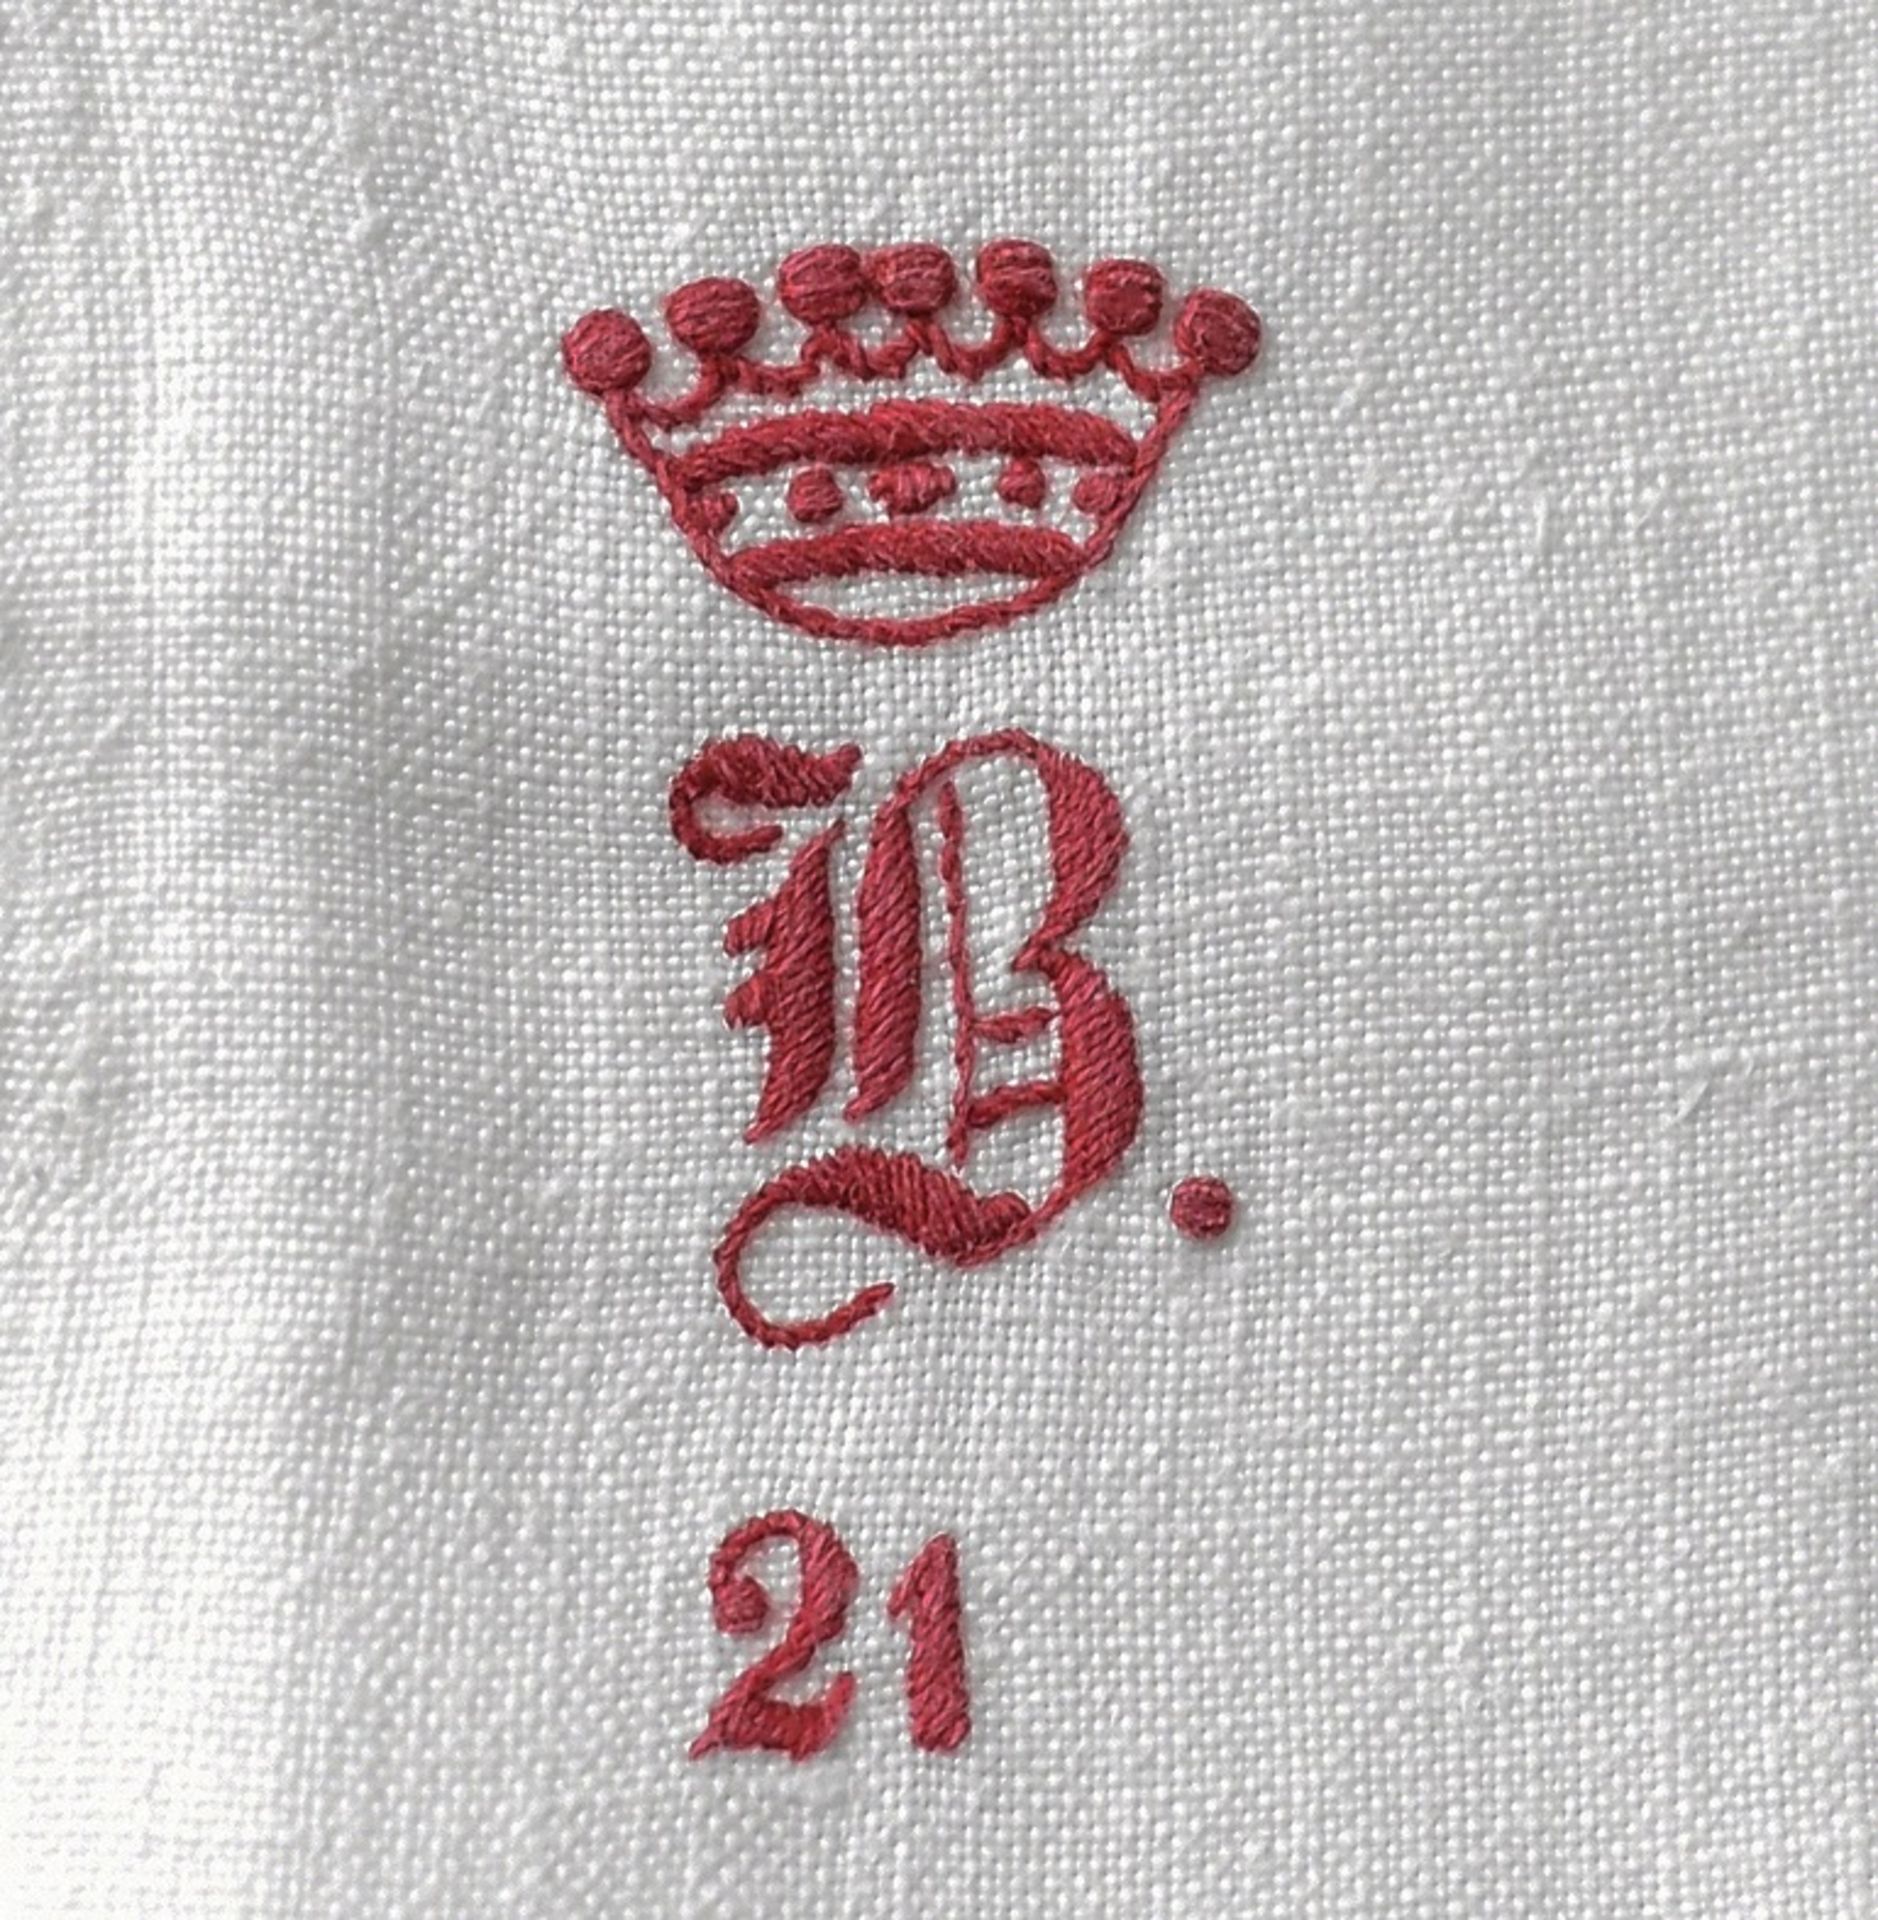 Paar Laken mit Monogramm "B" unter Freiherrenkrone, - Image 2 of 2